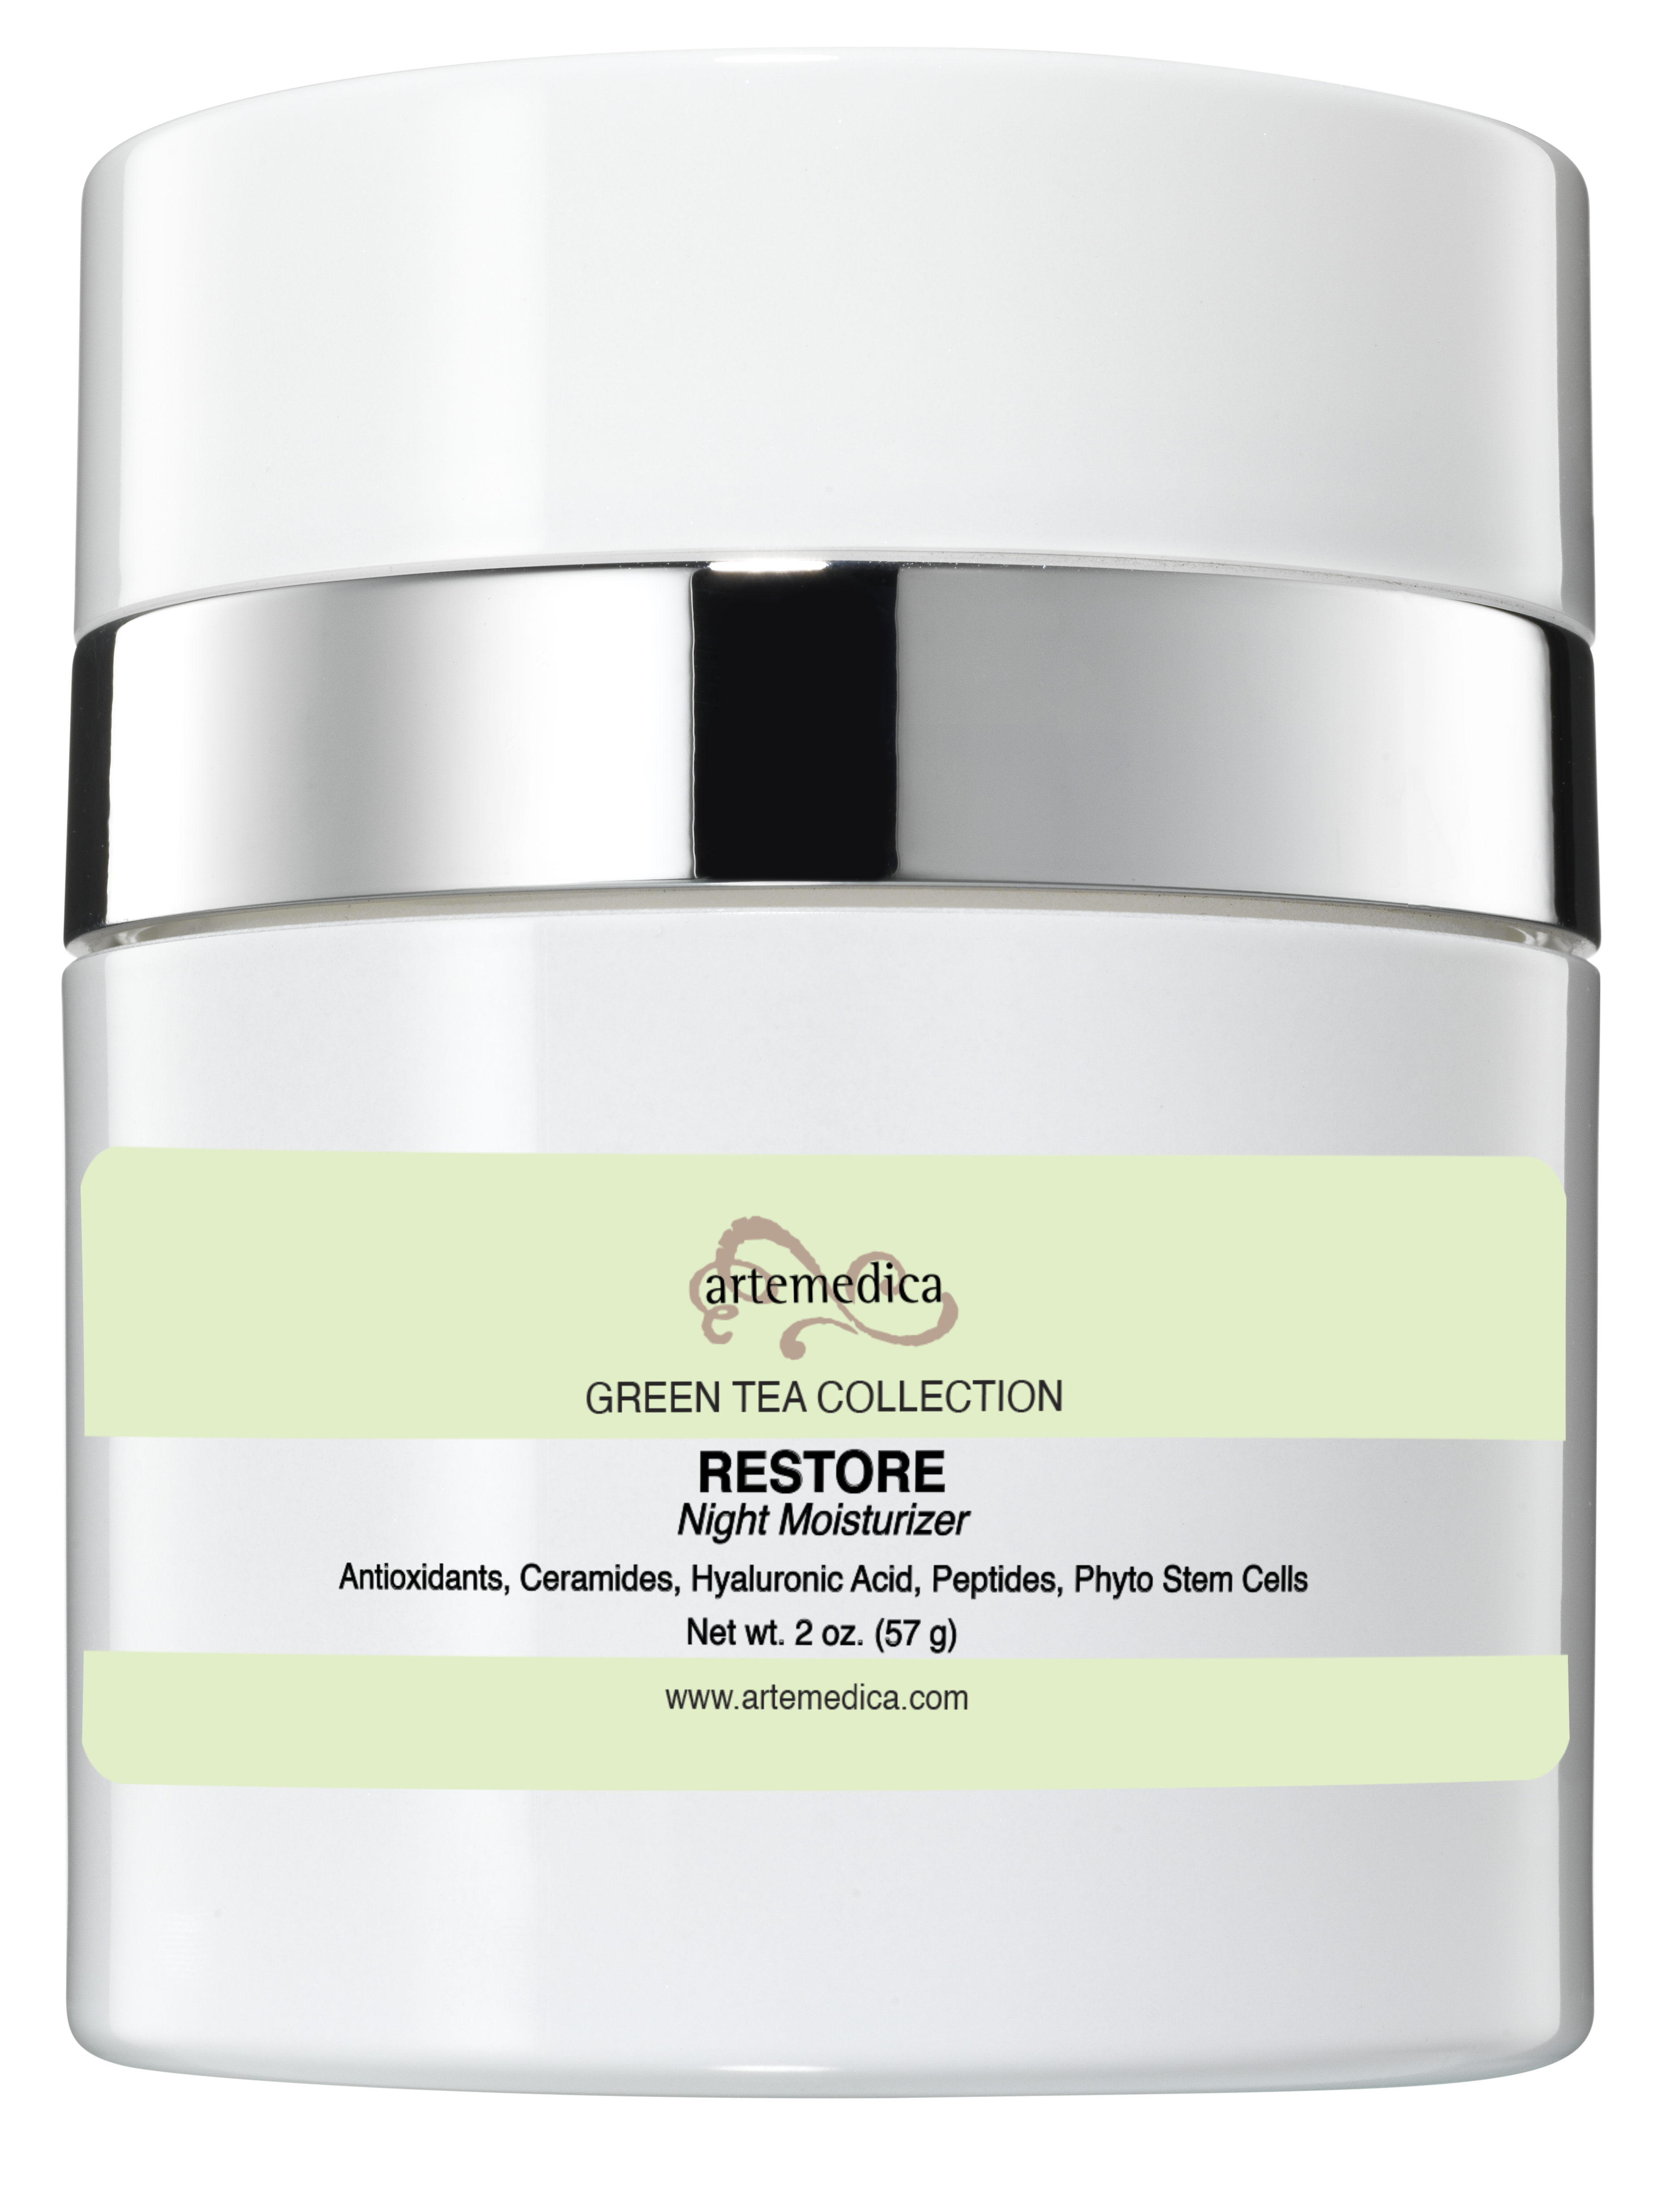 Artemedica skincare Green Tea collection restore night moisturizer